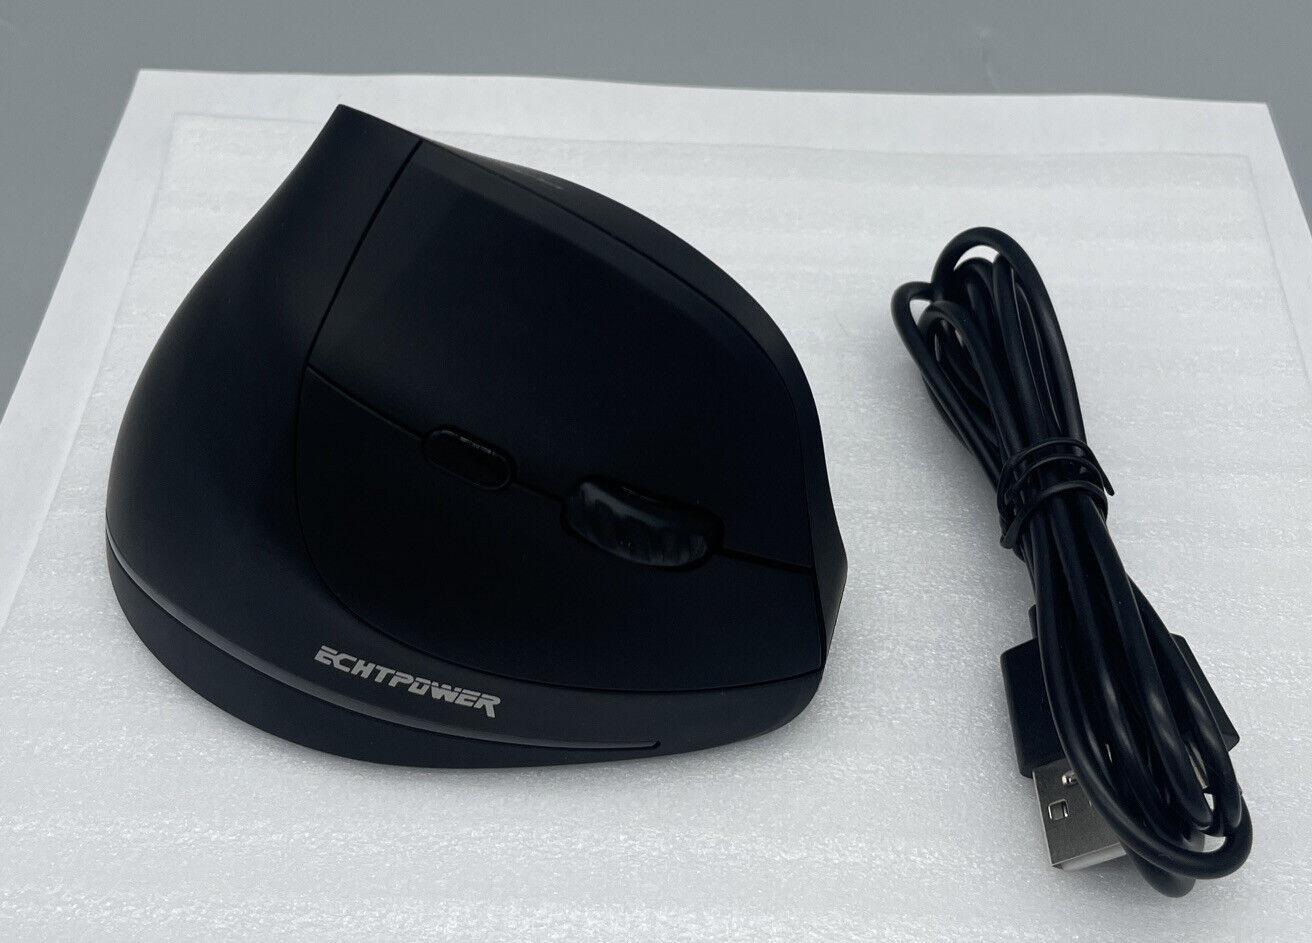 ECHTPower Ergonomic Rechargeable Wireless Vertical Gaming Mouse 6 Buttons